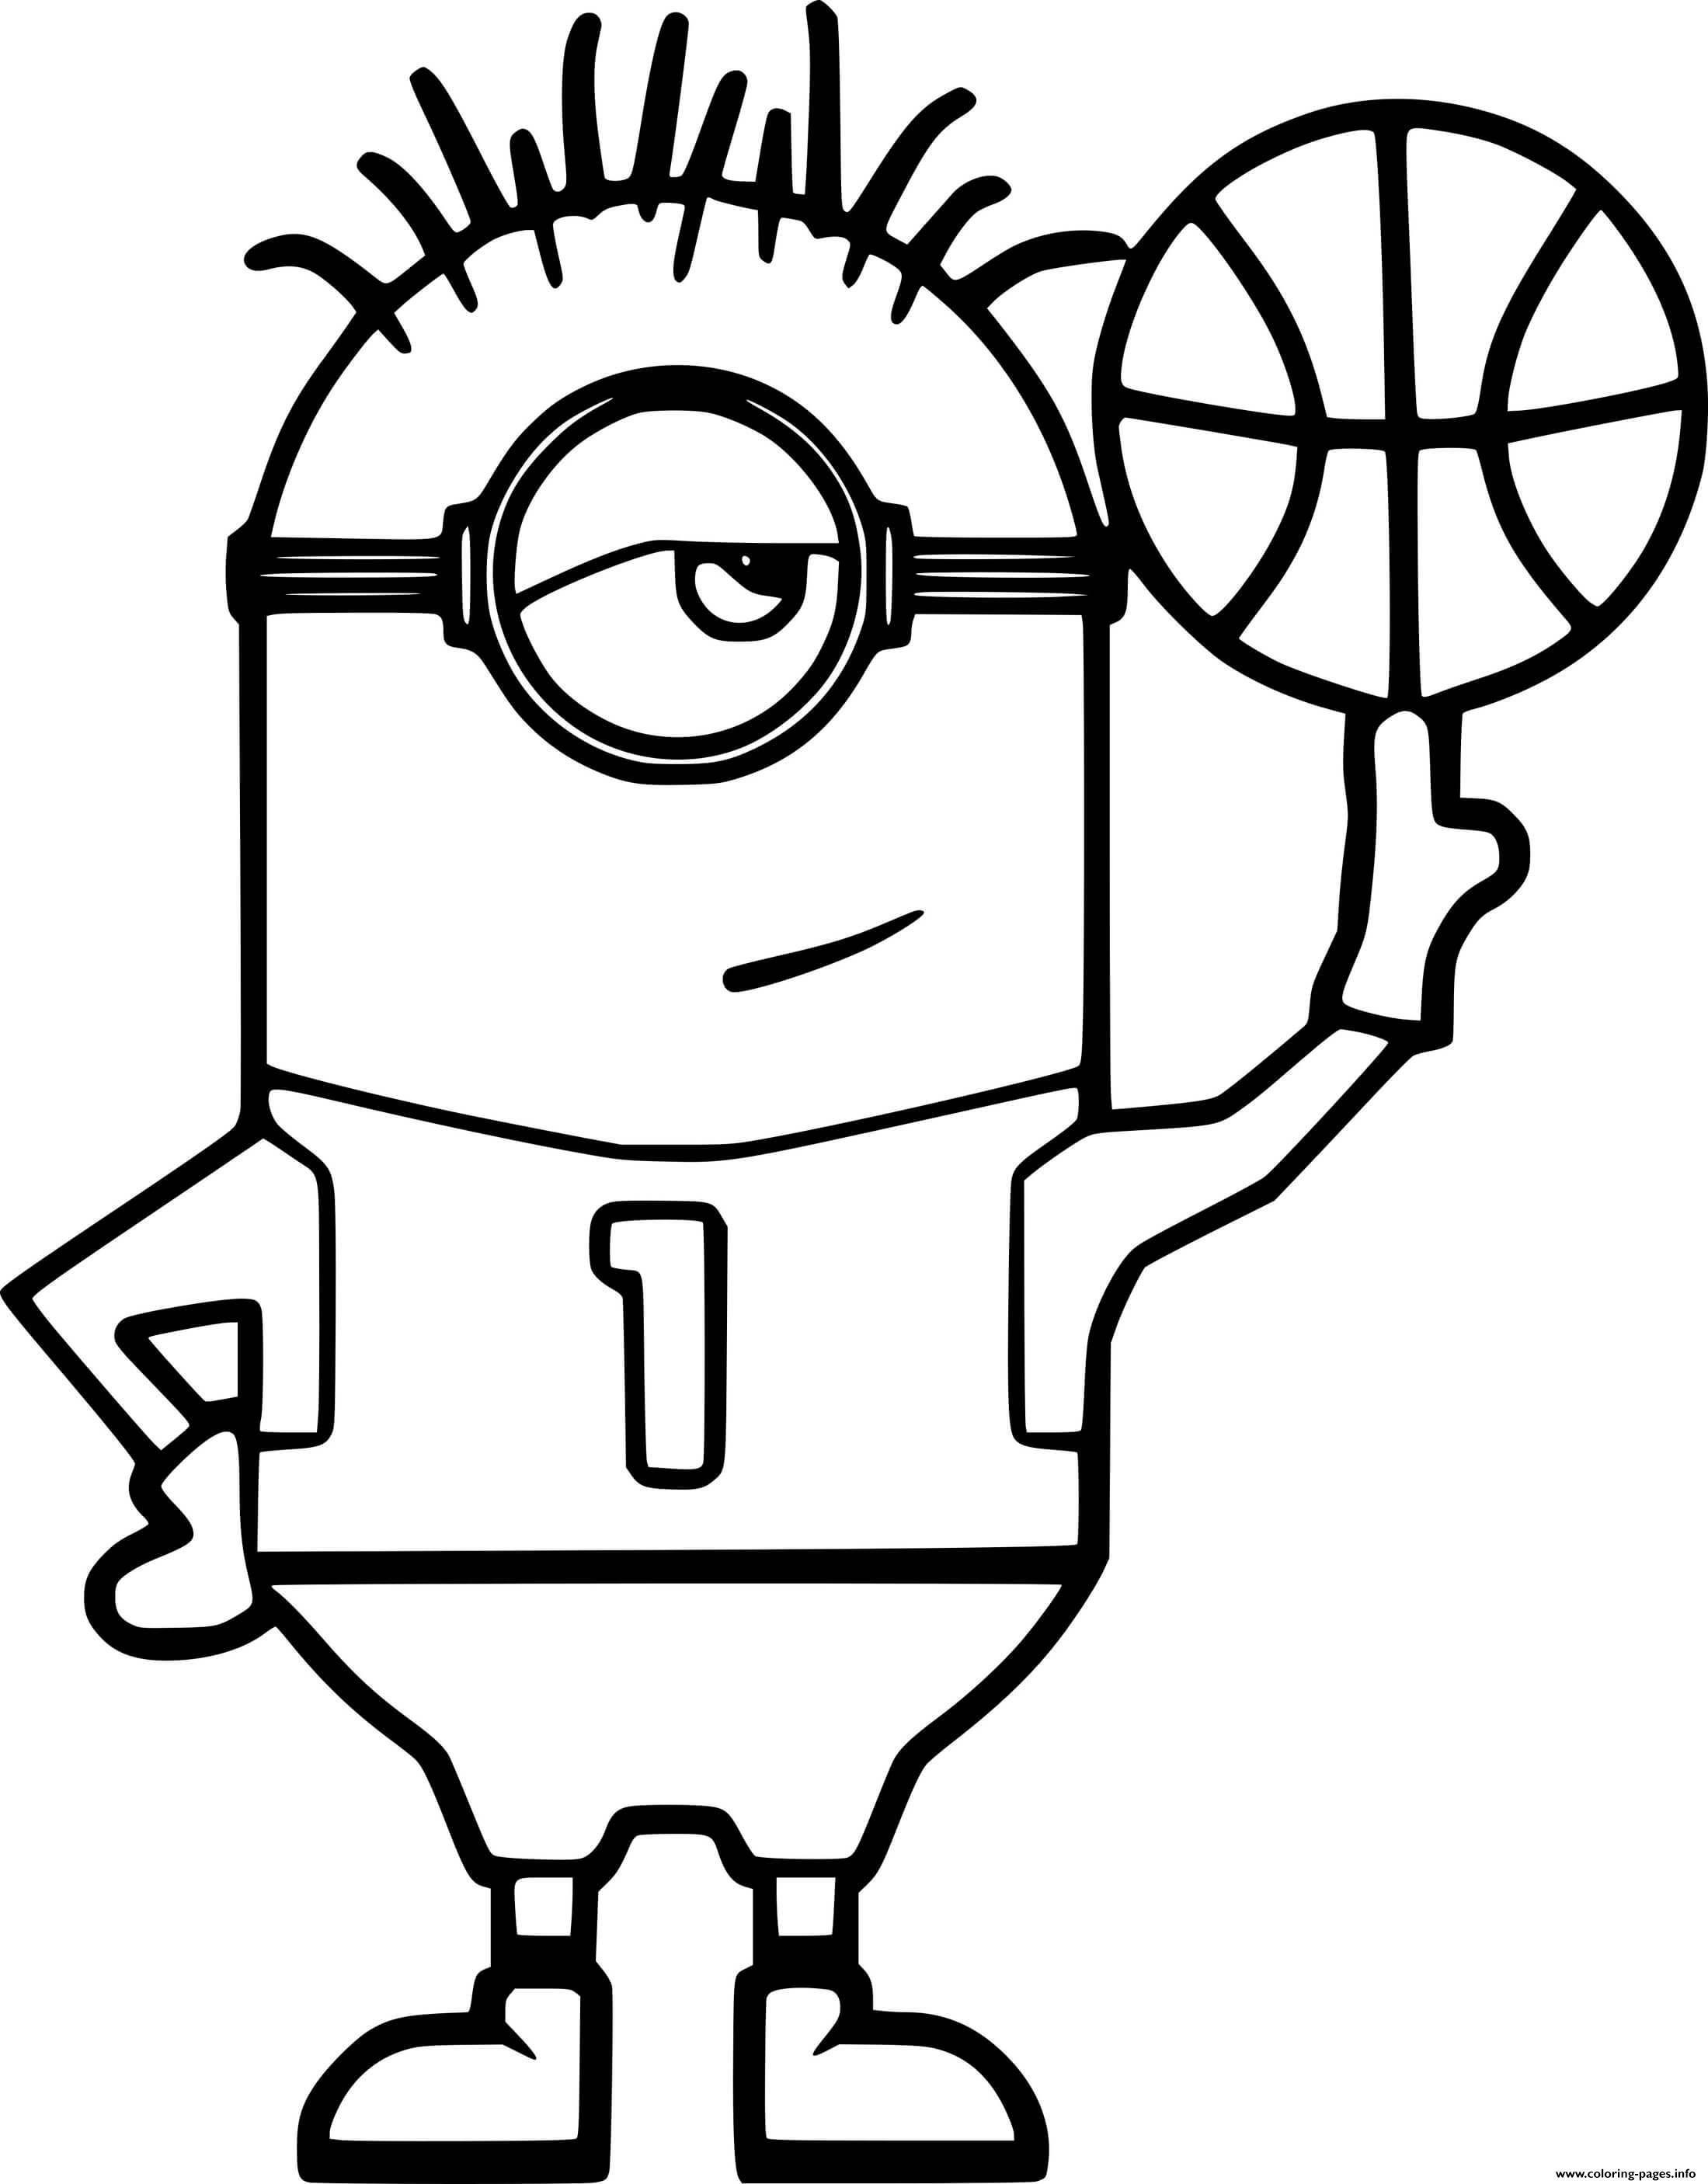 Minion Playing Basketball coloring